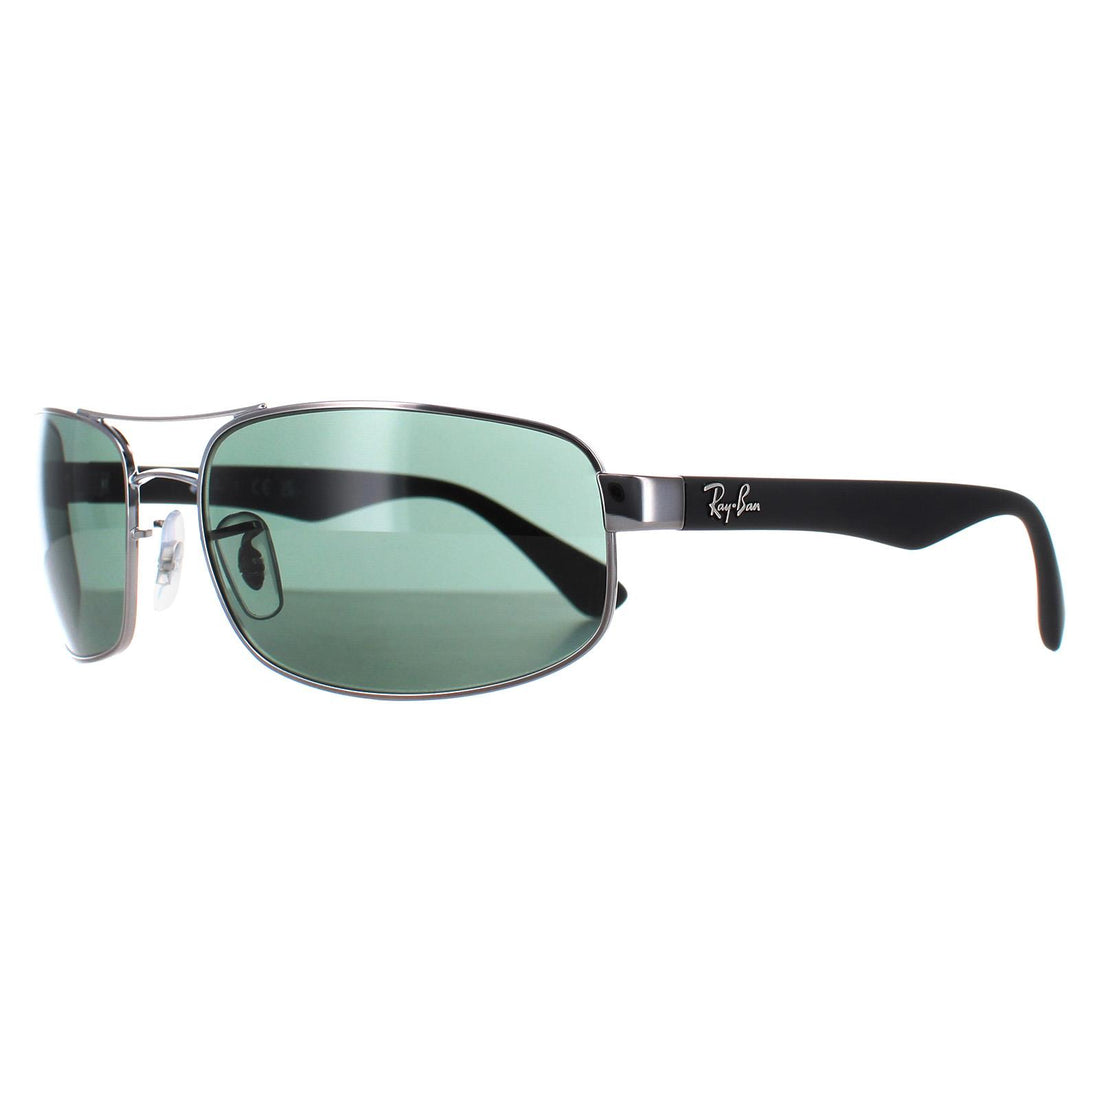 Rayban Sunglasses 3445 004 Gunmetal Green